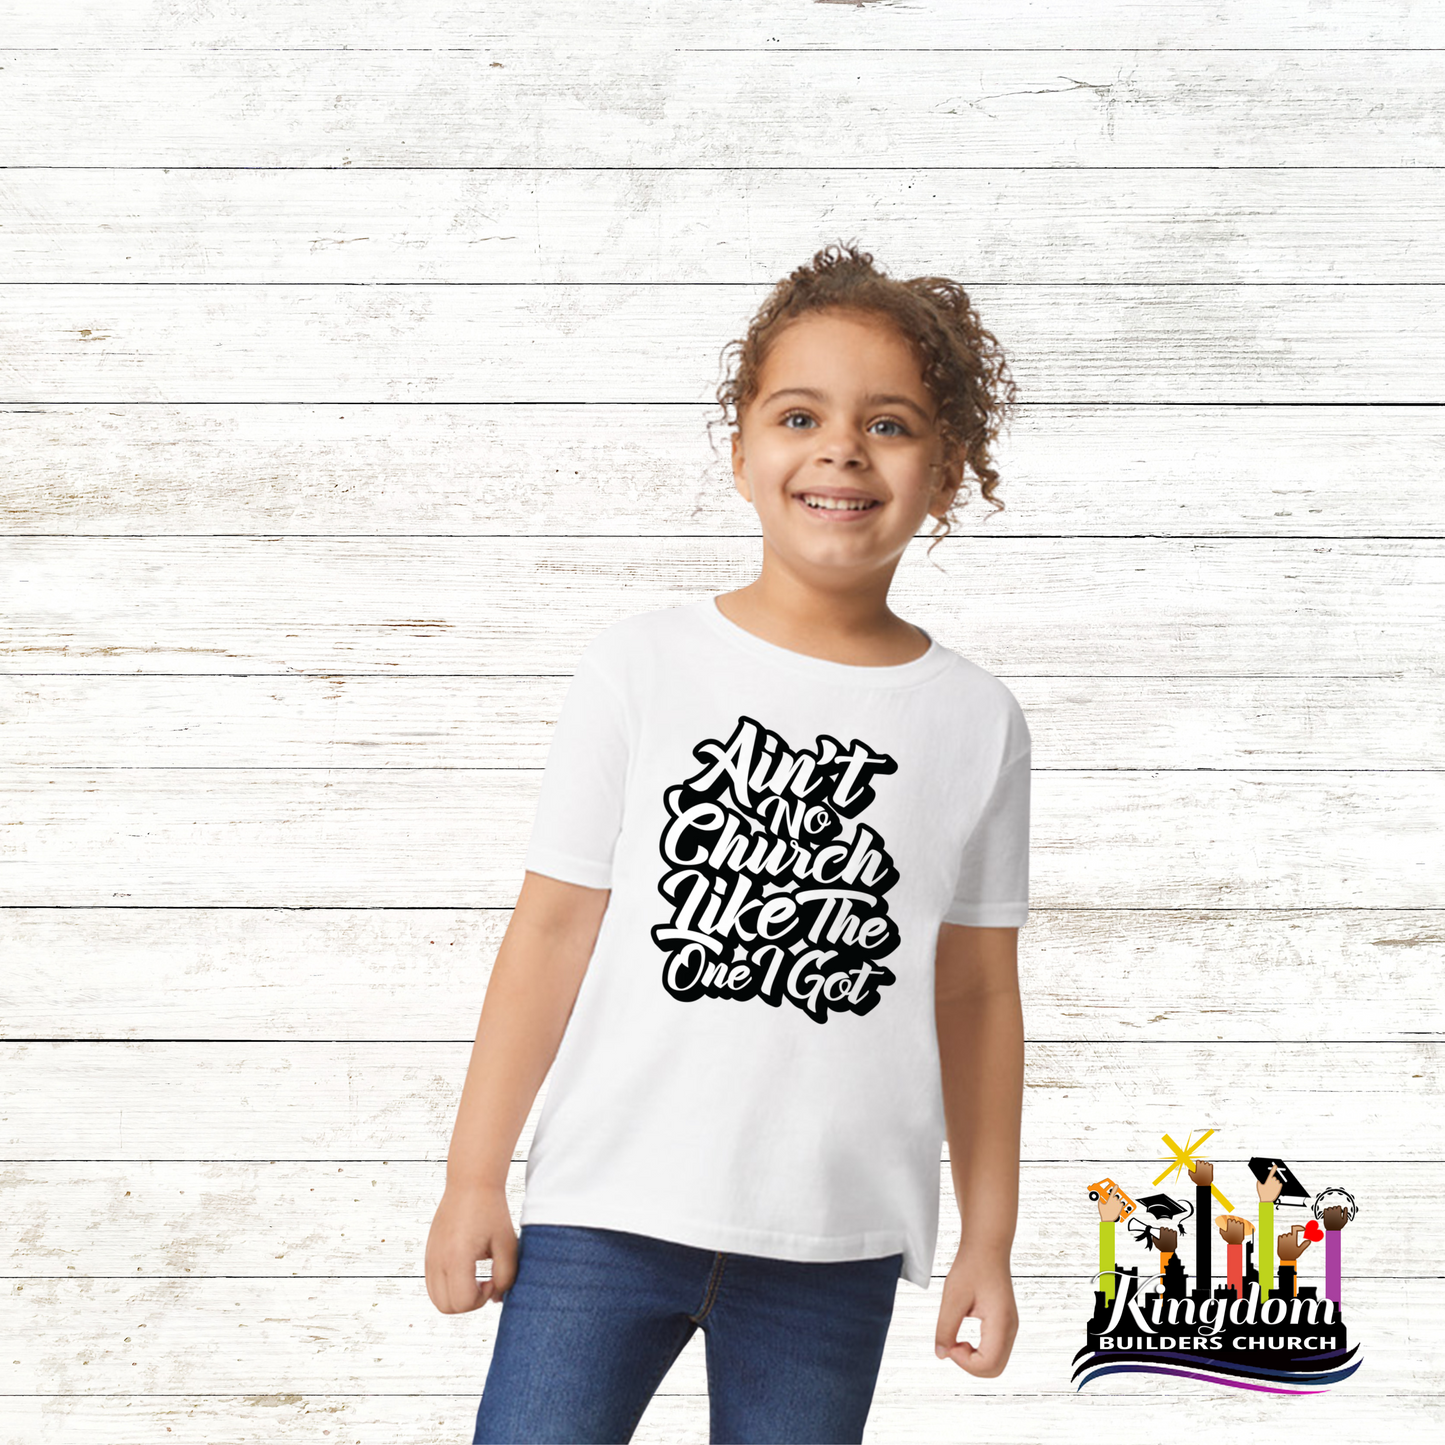 Kingdom Builder Church T-Shirt -Kids Size